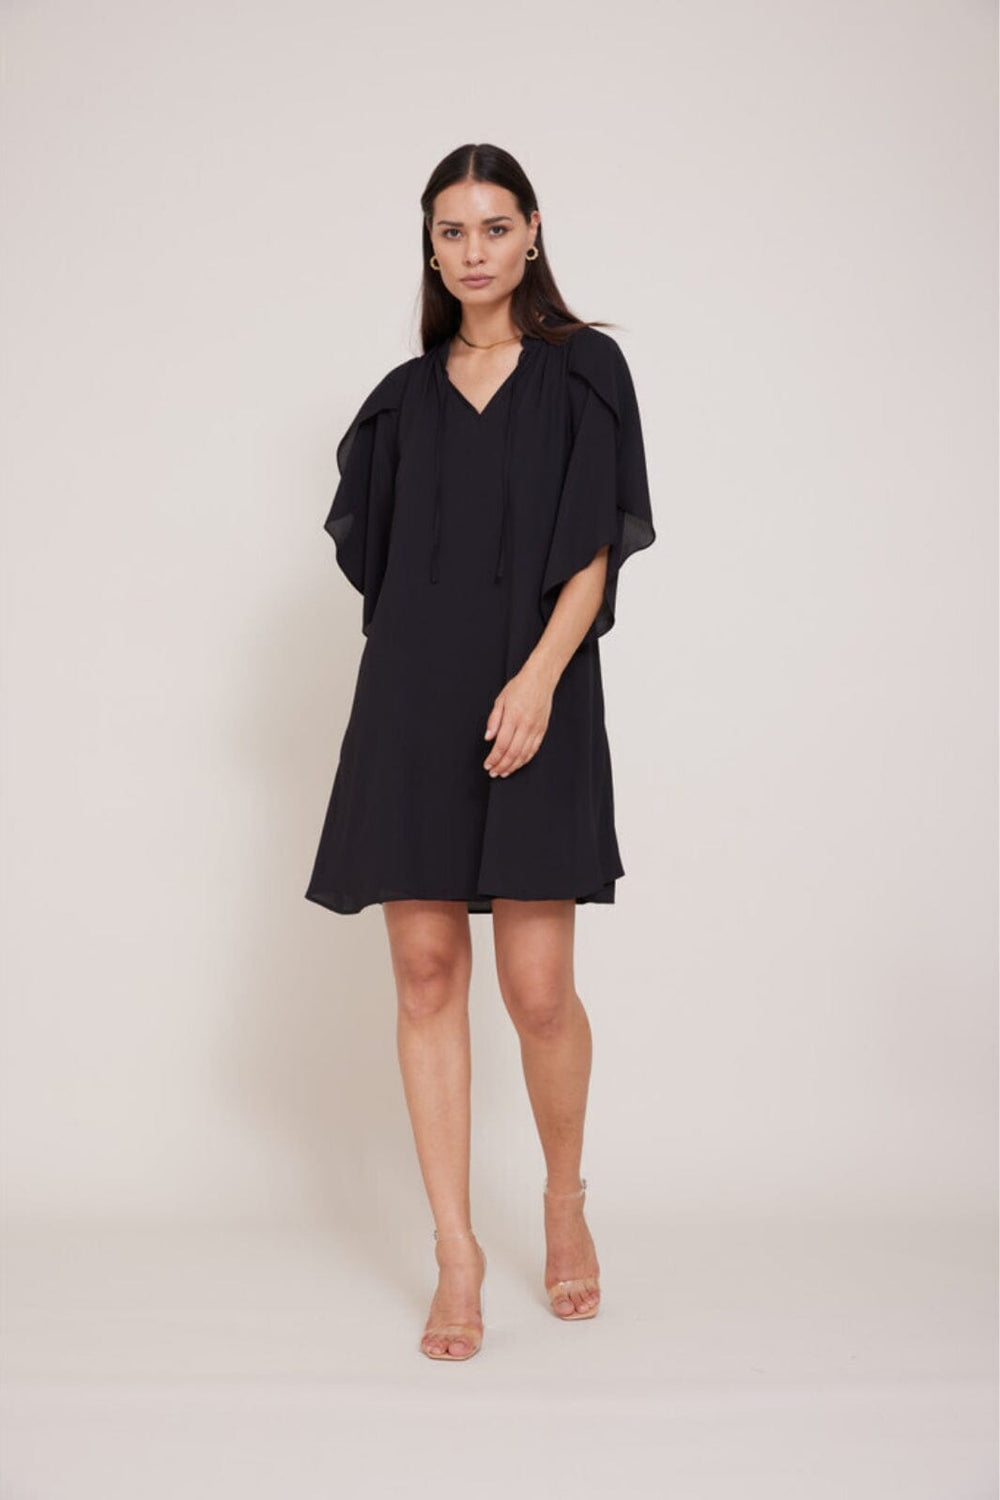 Bruuns Bazaar - CamillaBBParez dress - Black Kjoler 